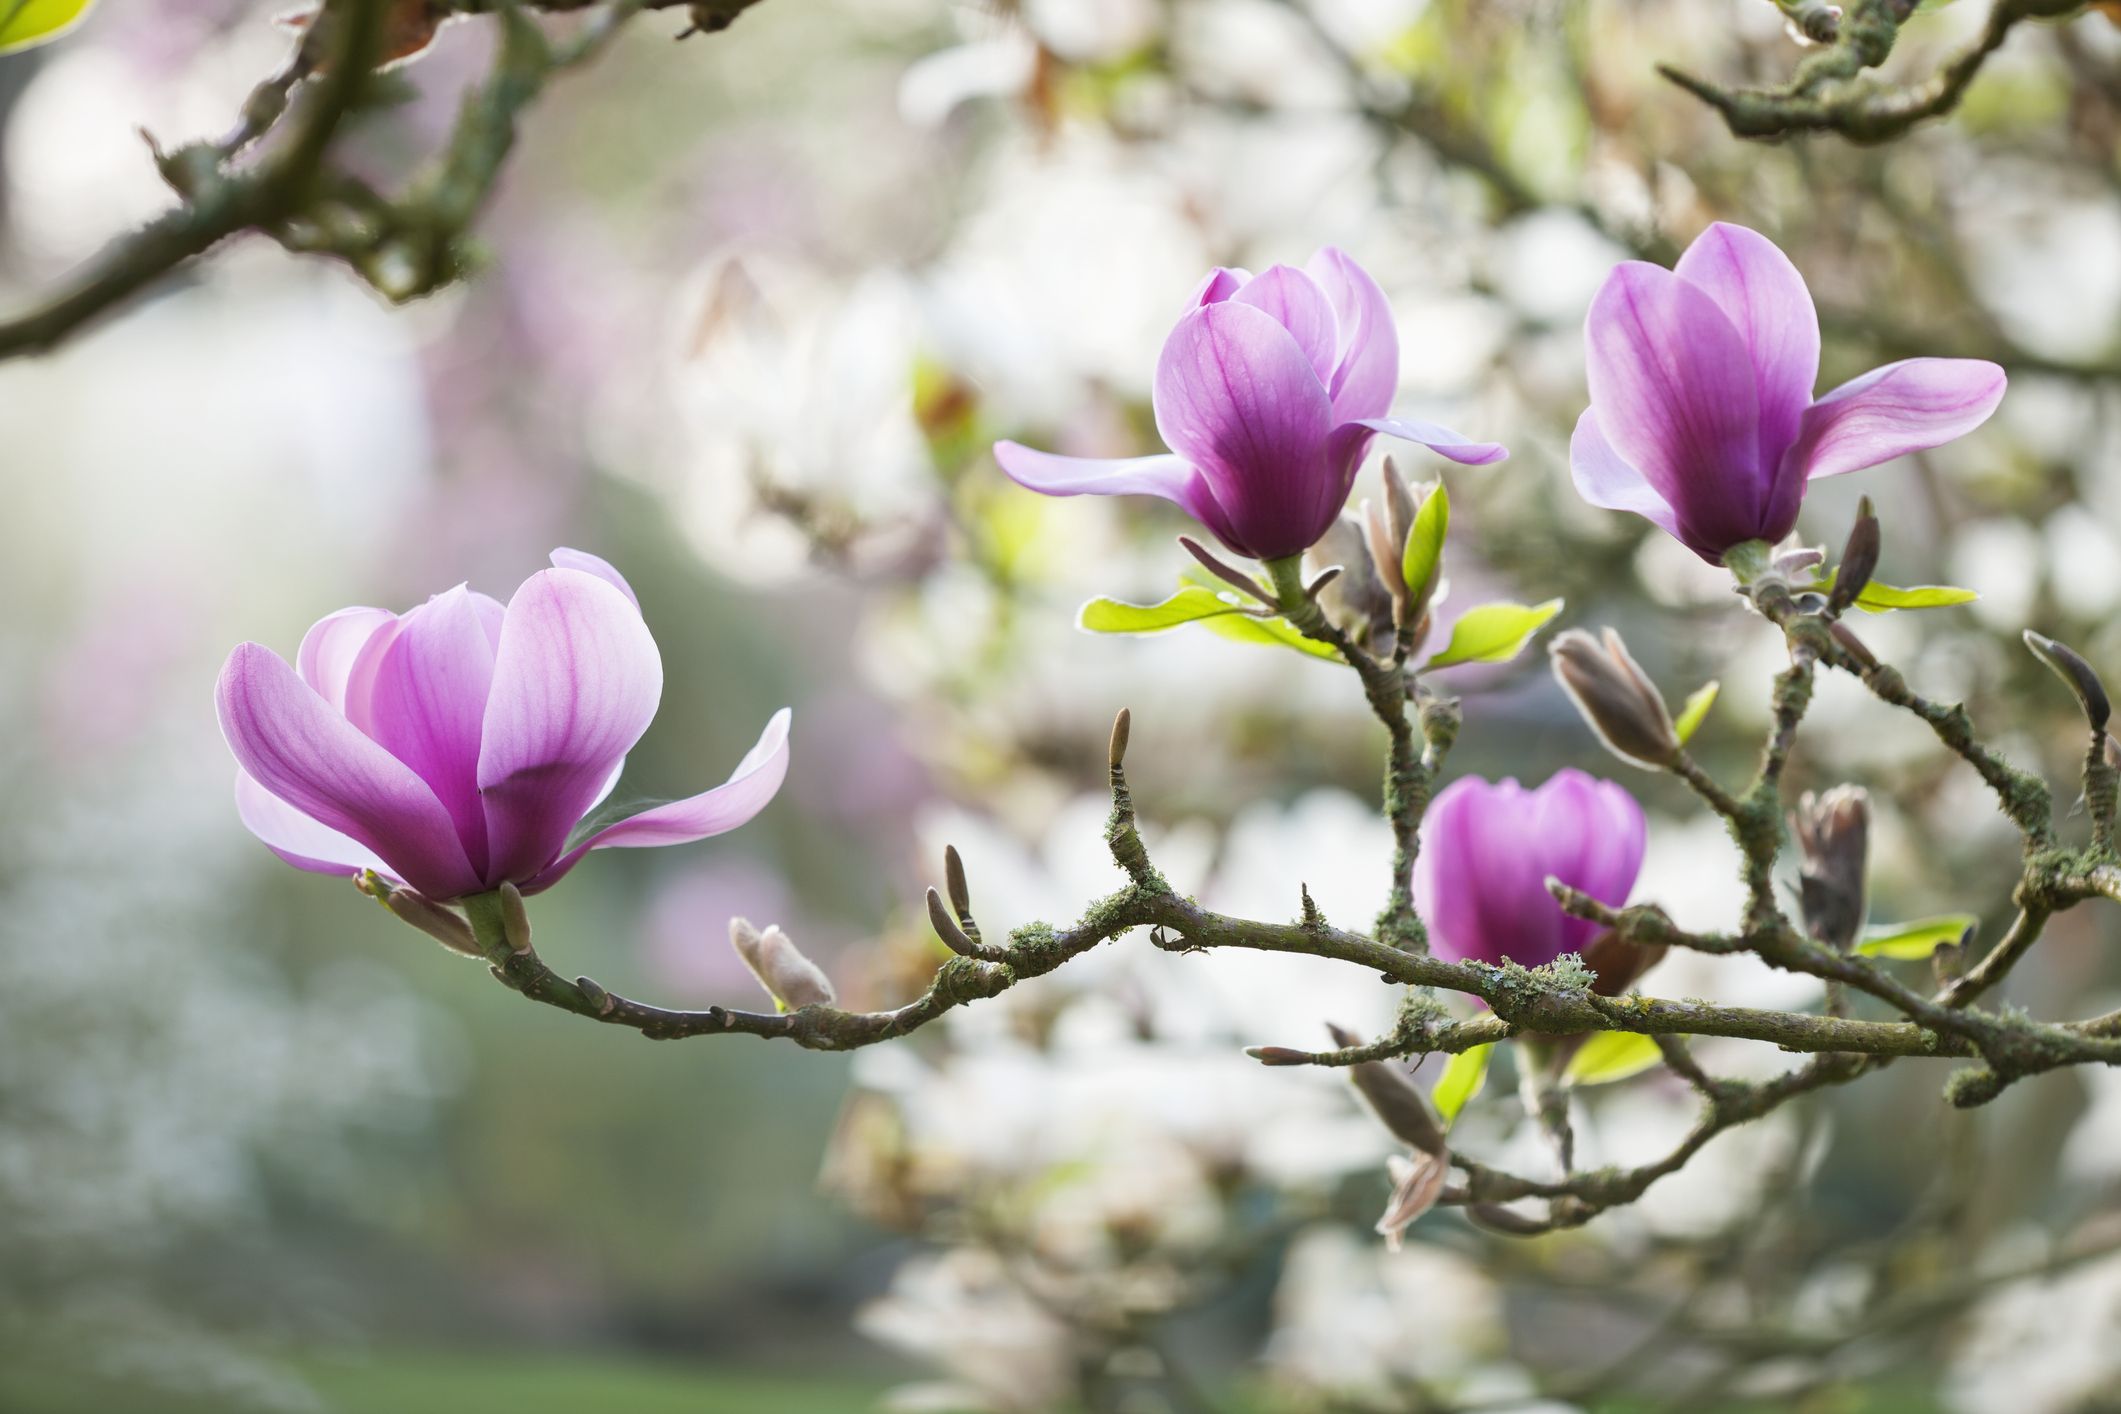 20 Early-Spring Flowering Plants